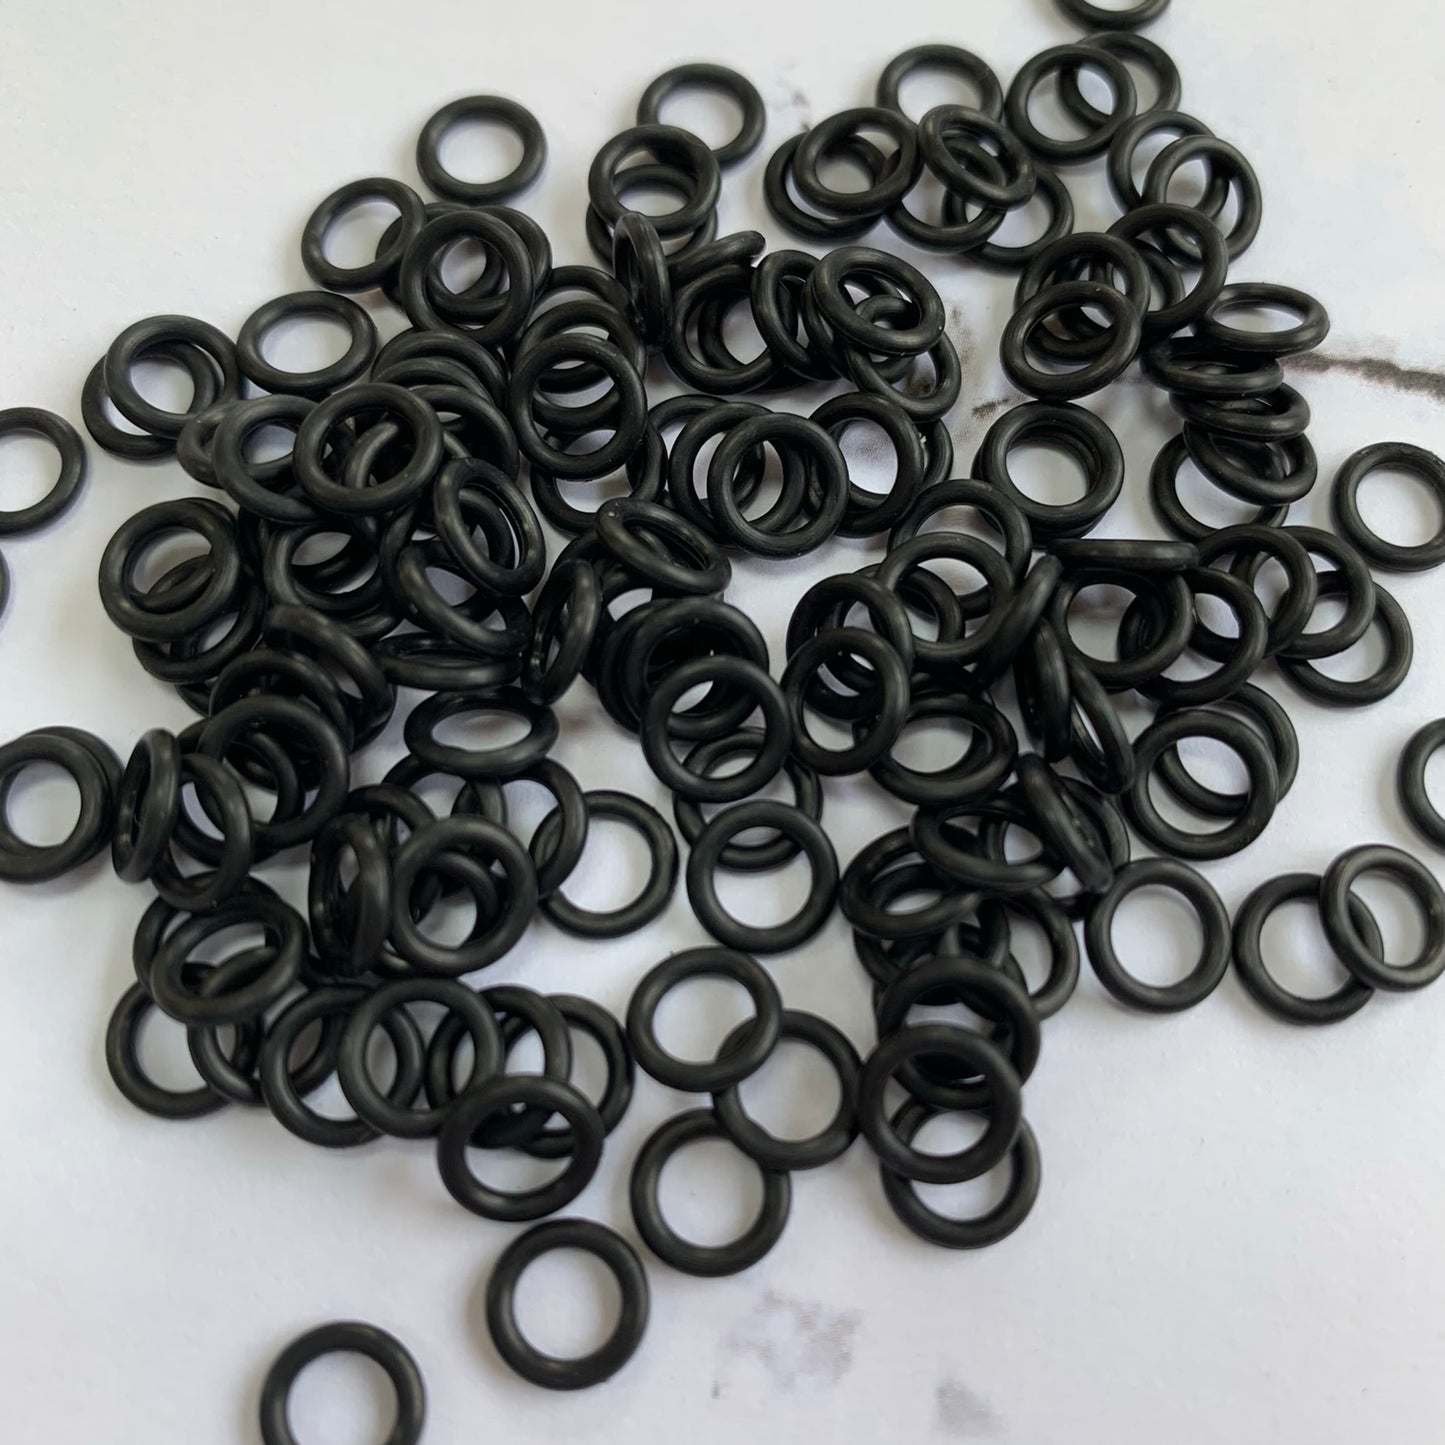 6.6mm Rubber O-Rings (ID: 3.5mm) - Black